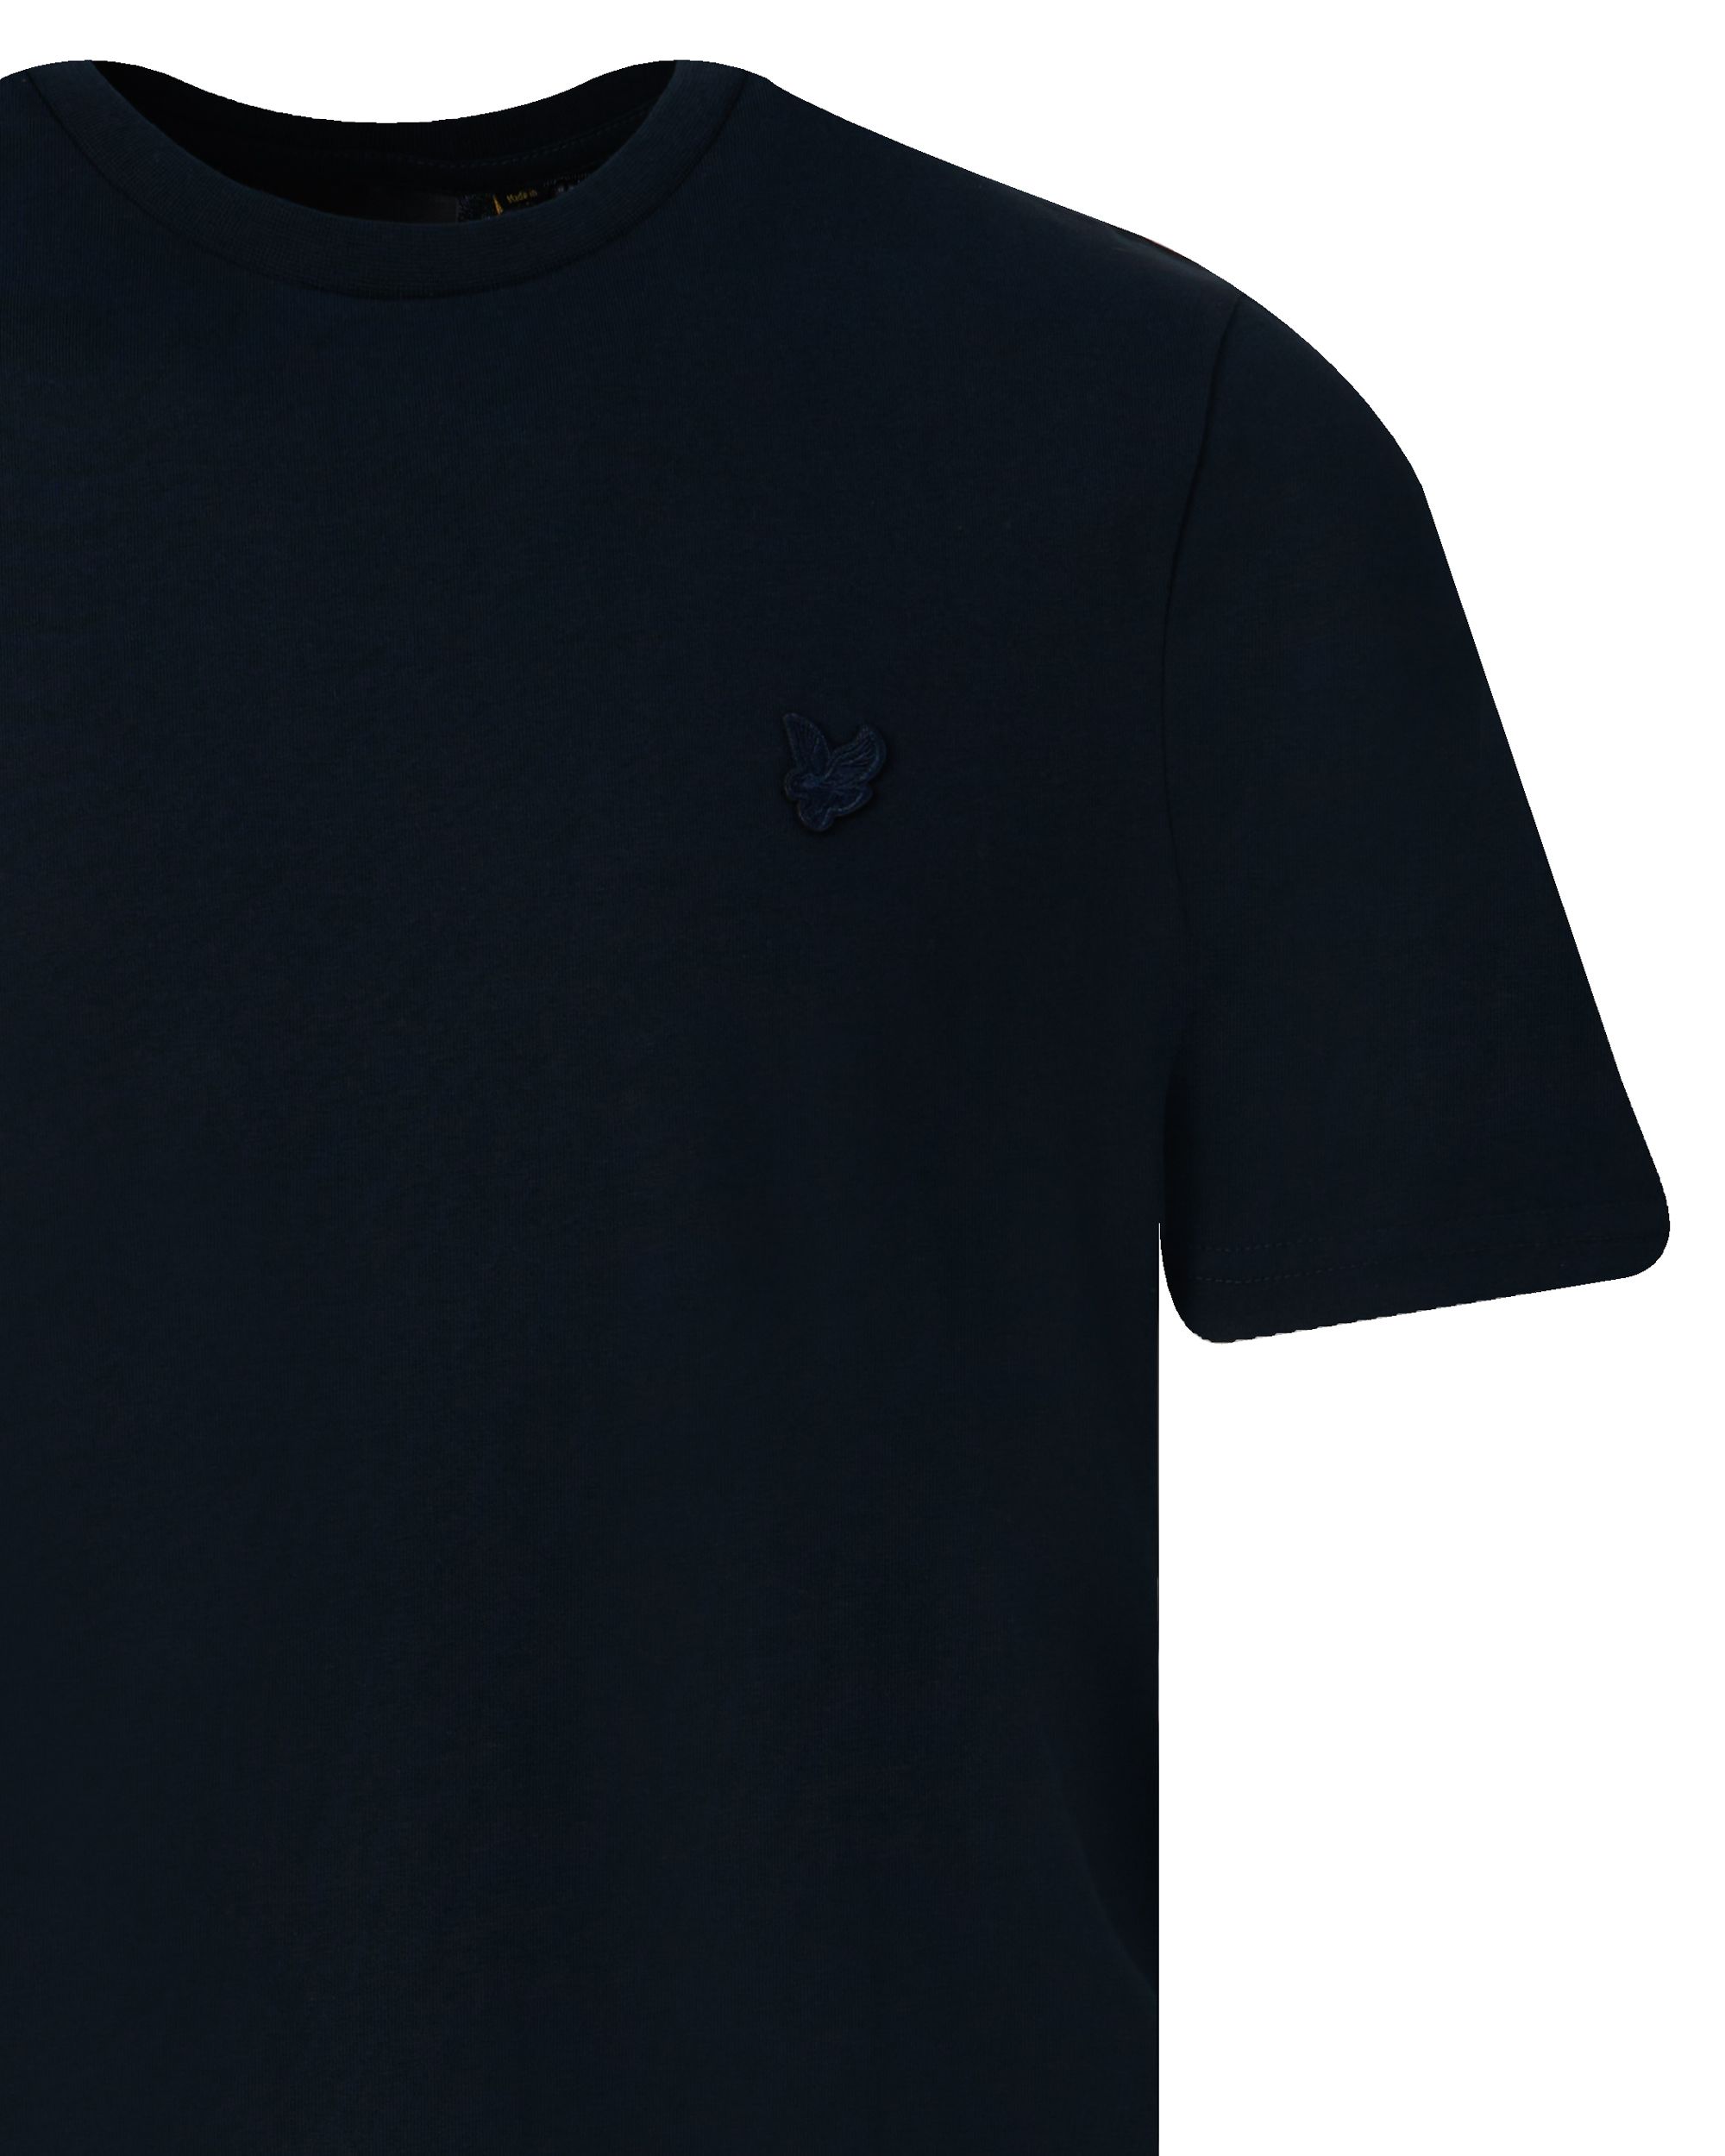 Lyle & Scott T-shirt KM Donker blauw 095447-001-L